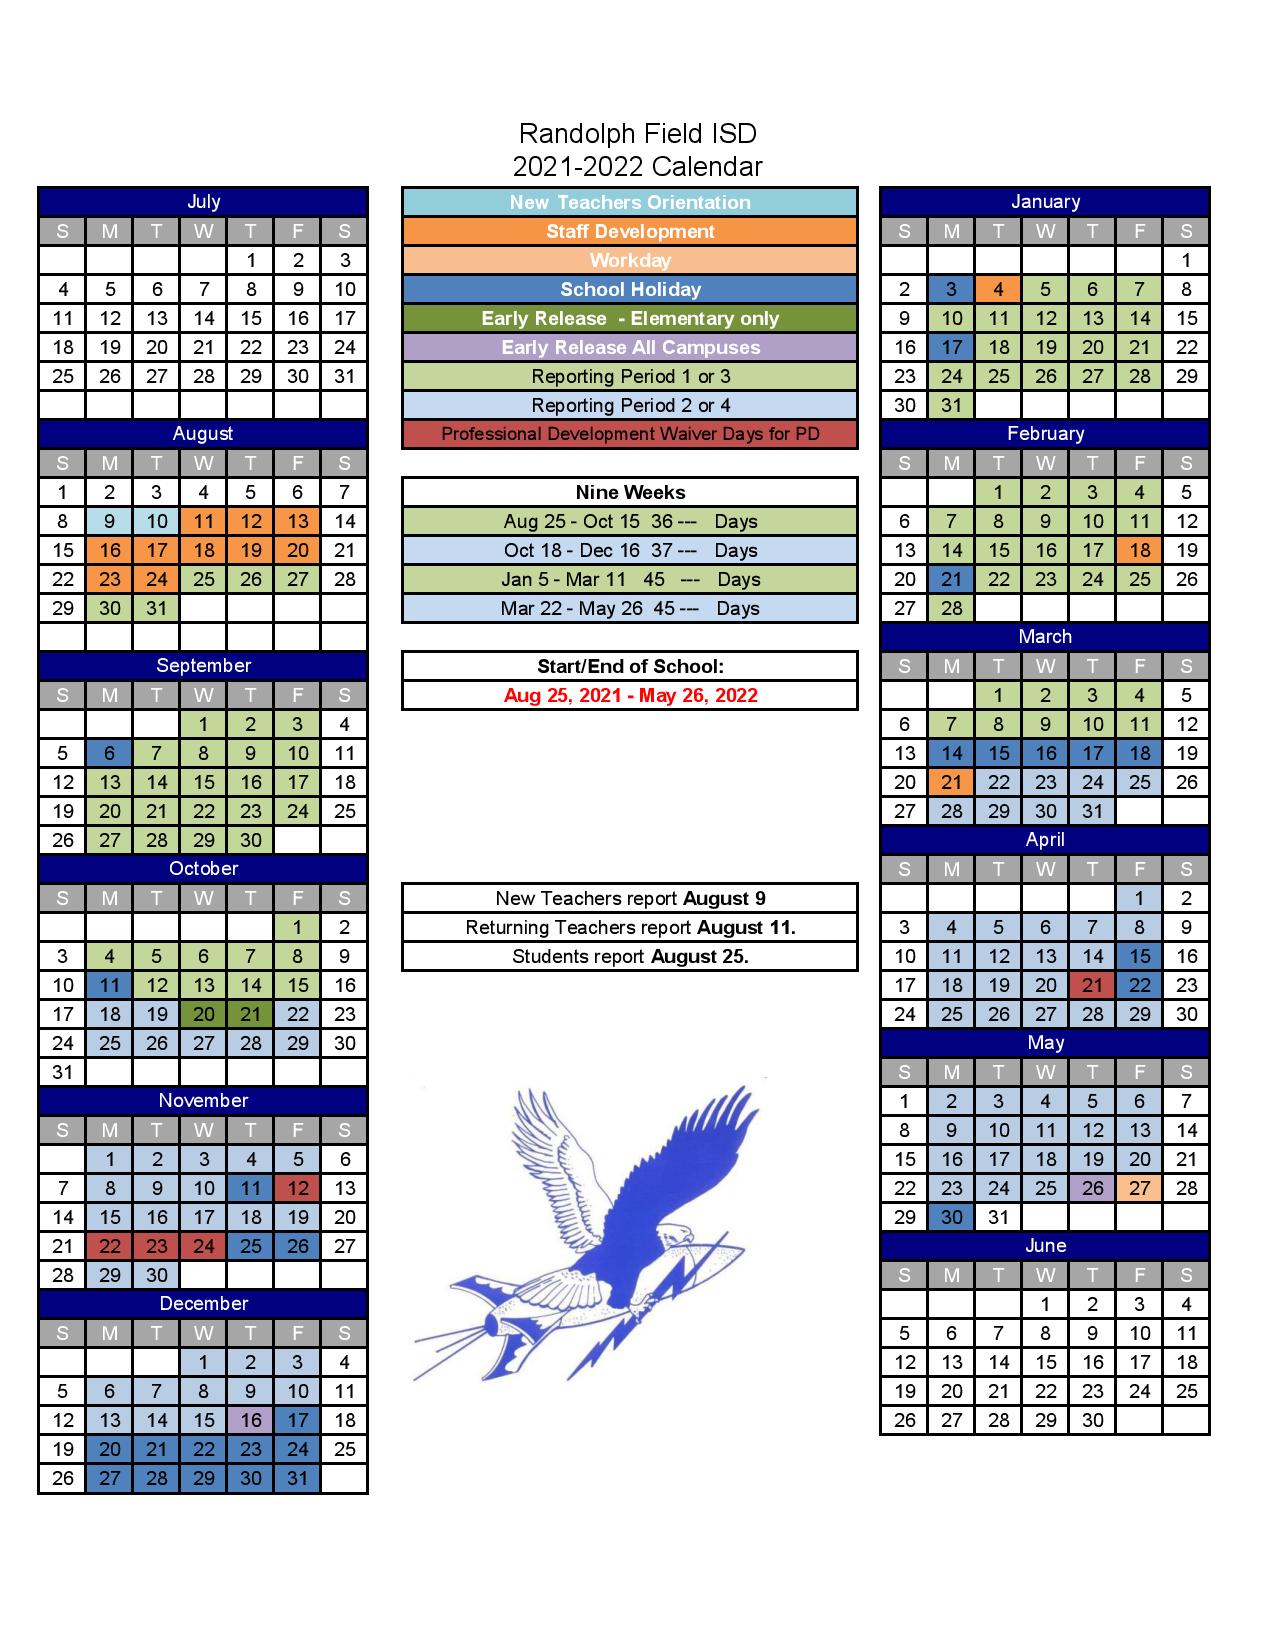 Randolph Field Independent School District Calendar 2021 2022